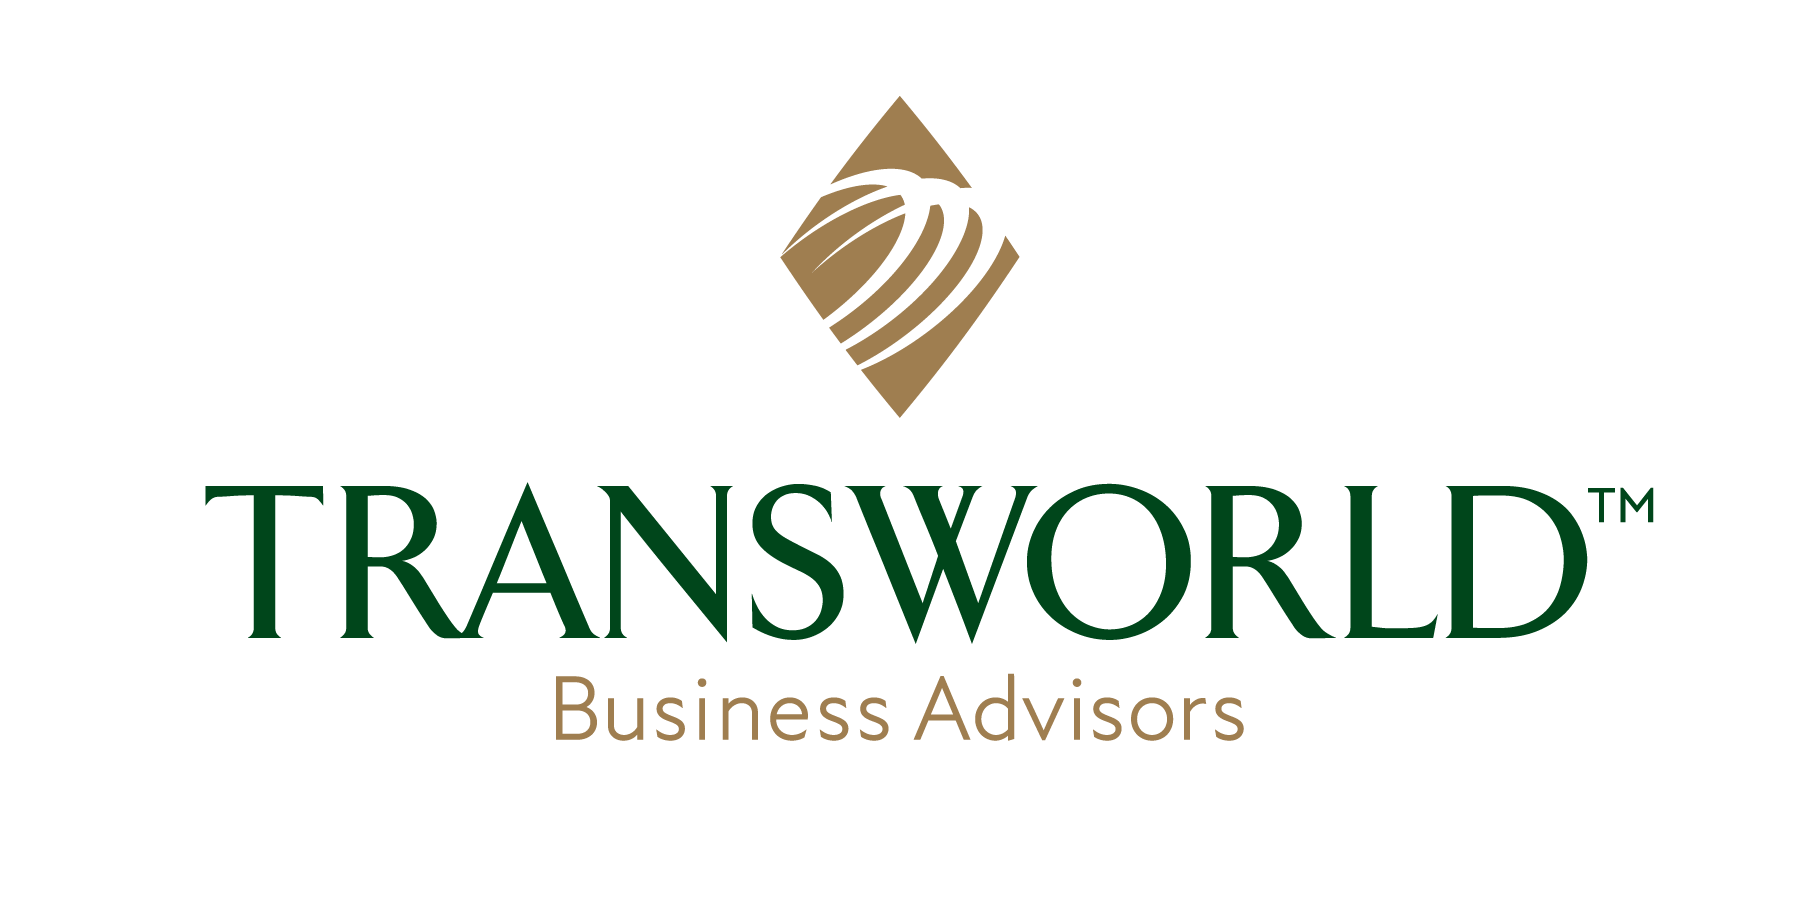 Transworld Business Advisors of Raleigh